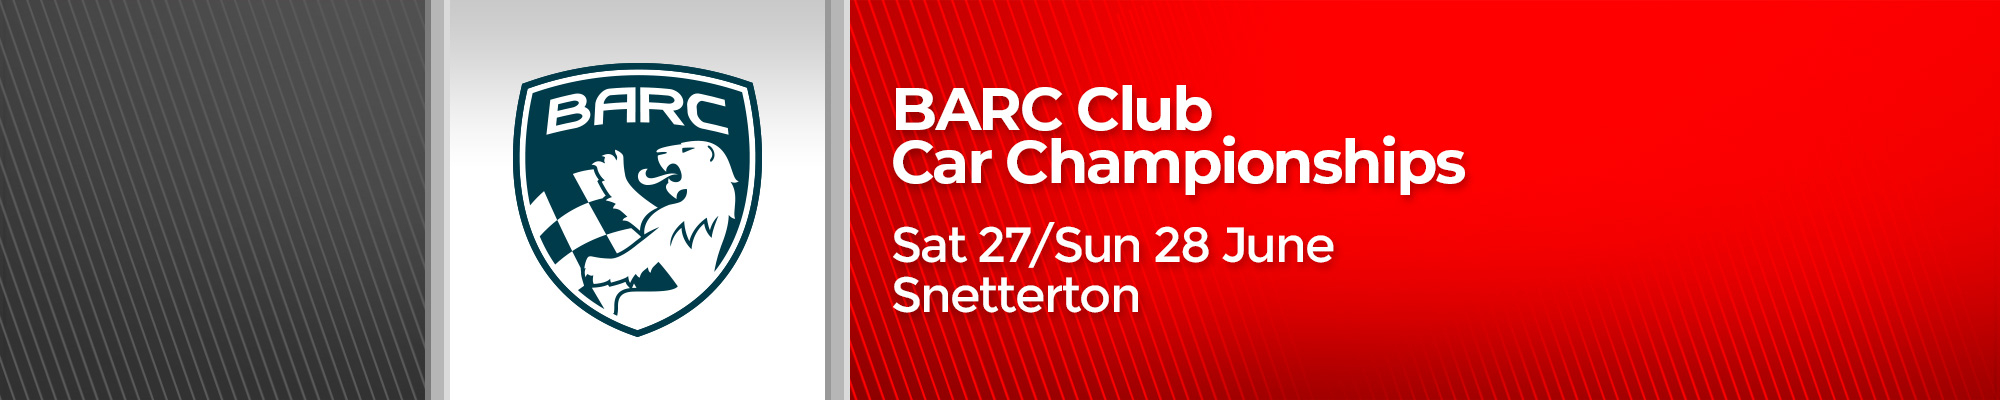  BARC Club Car Championships - POSTPONED